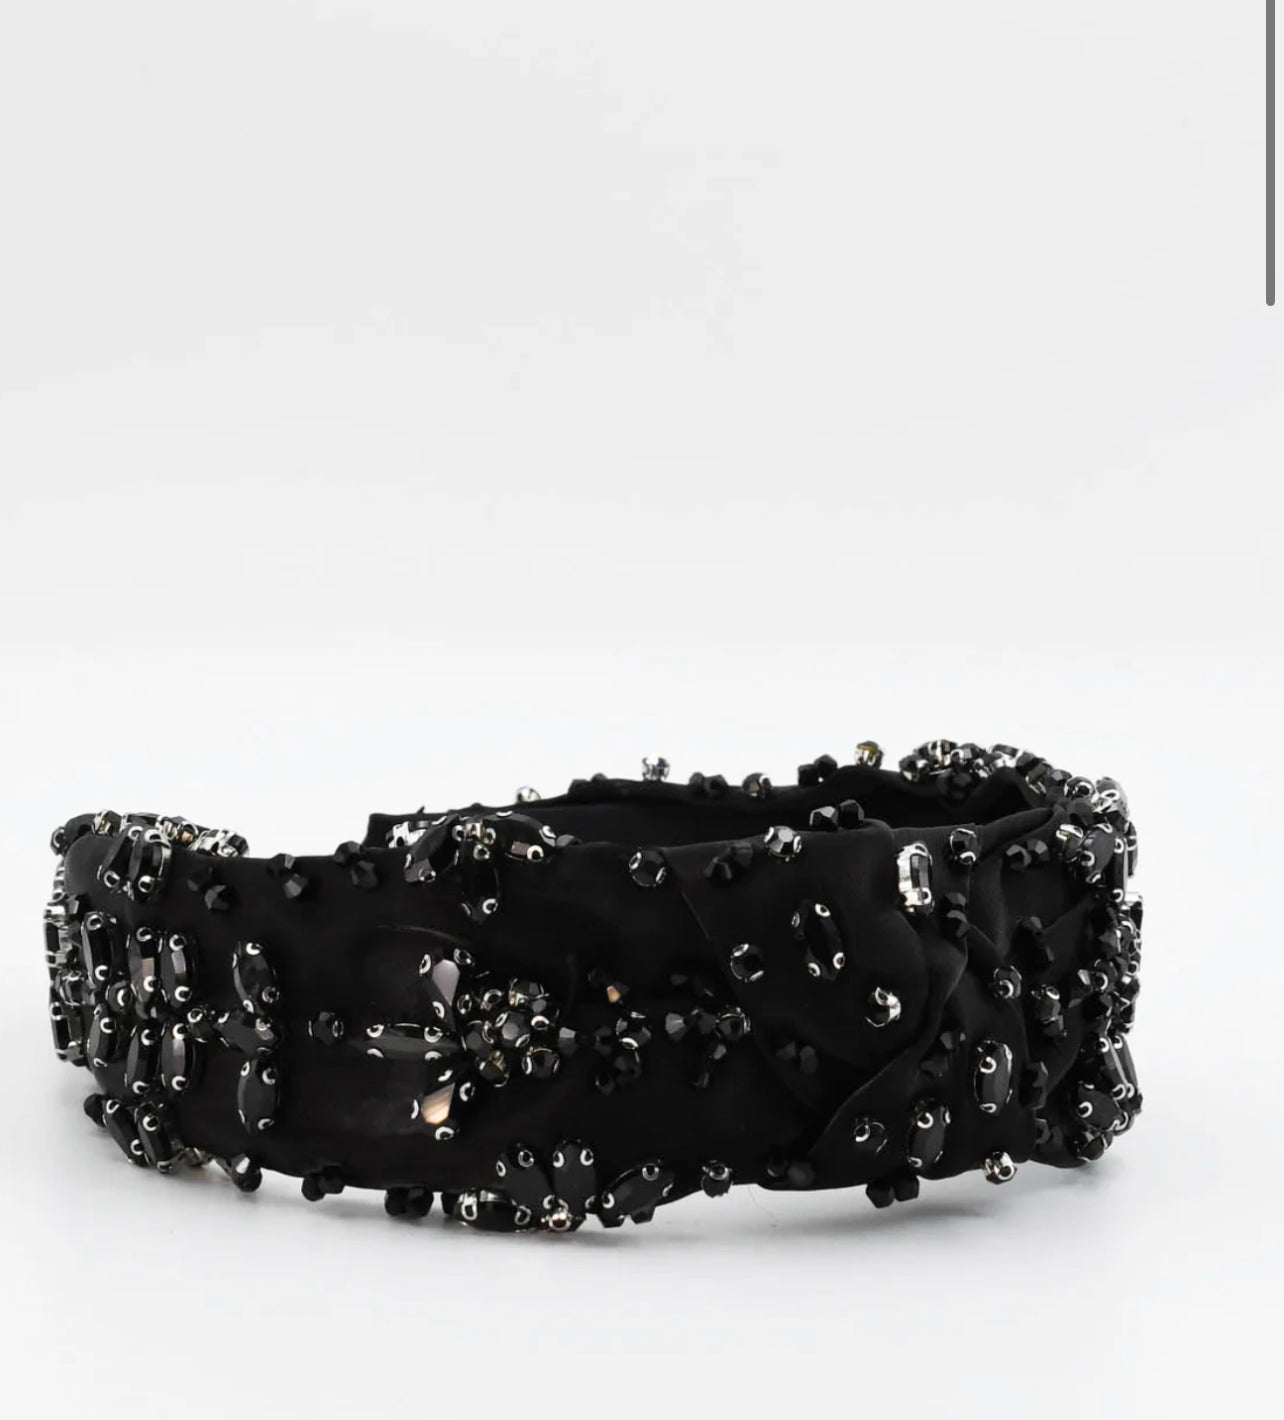 Bejeweled Black Headband (Black)